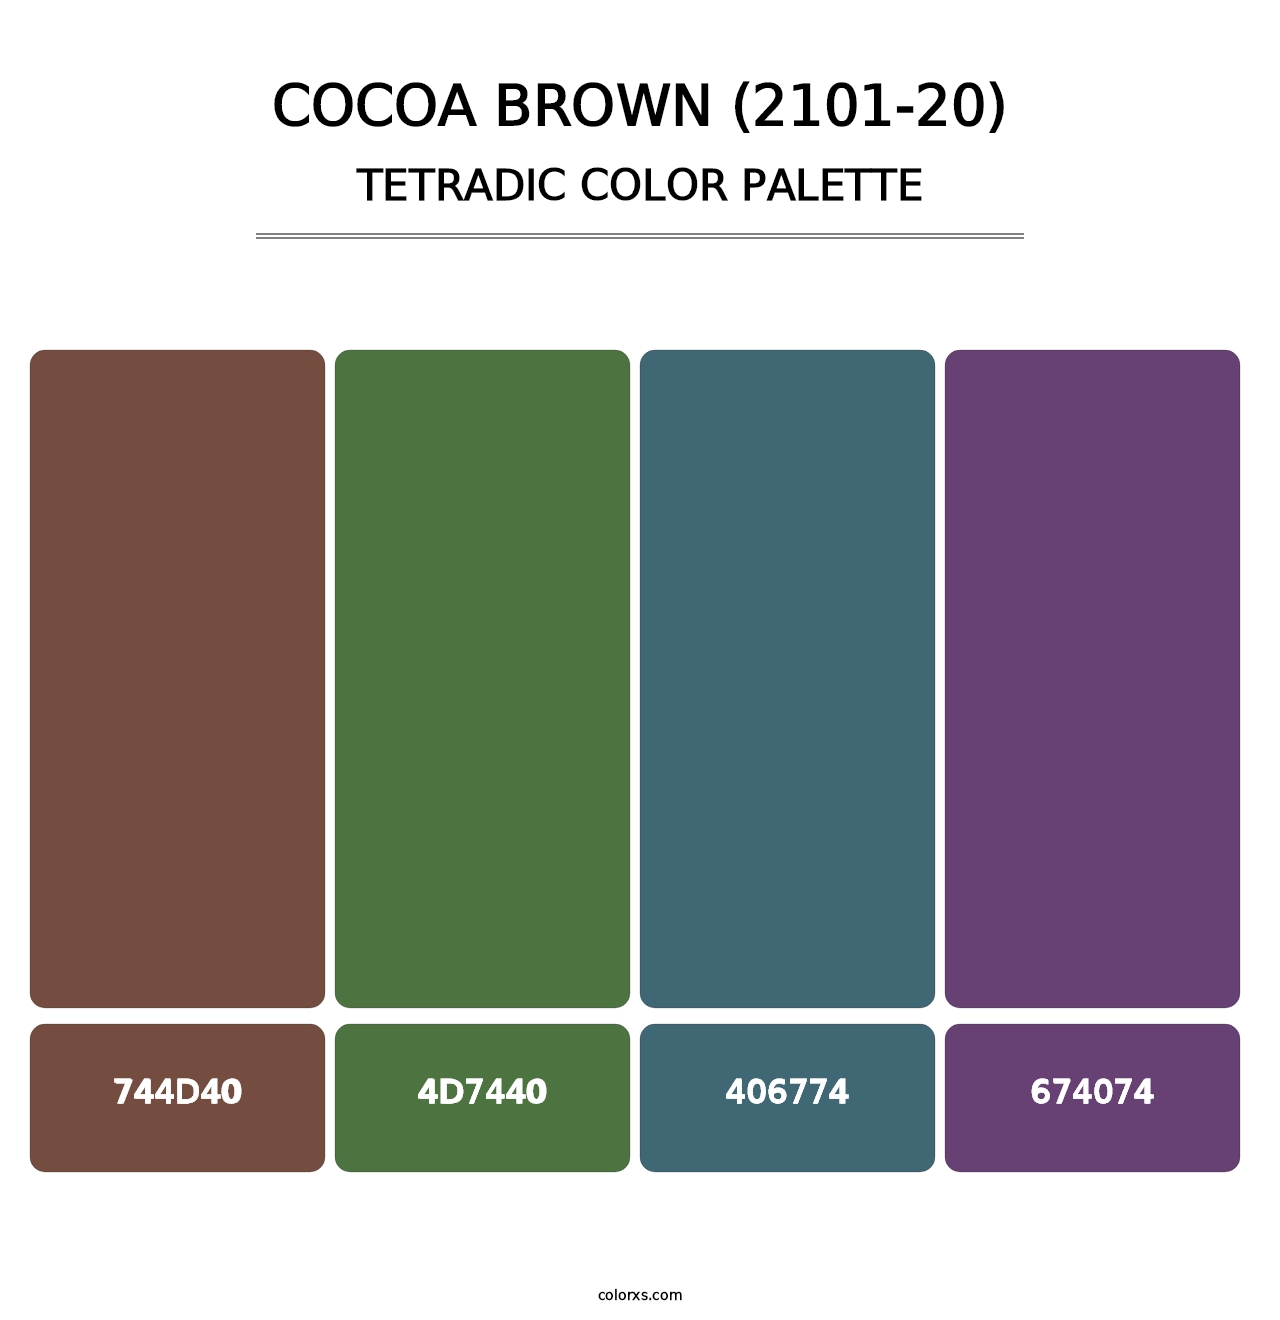 Cocoa Brown (2101-20) - Tetradic Color Palette